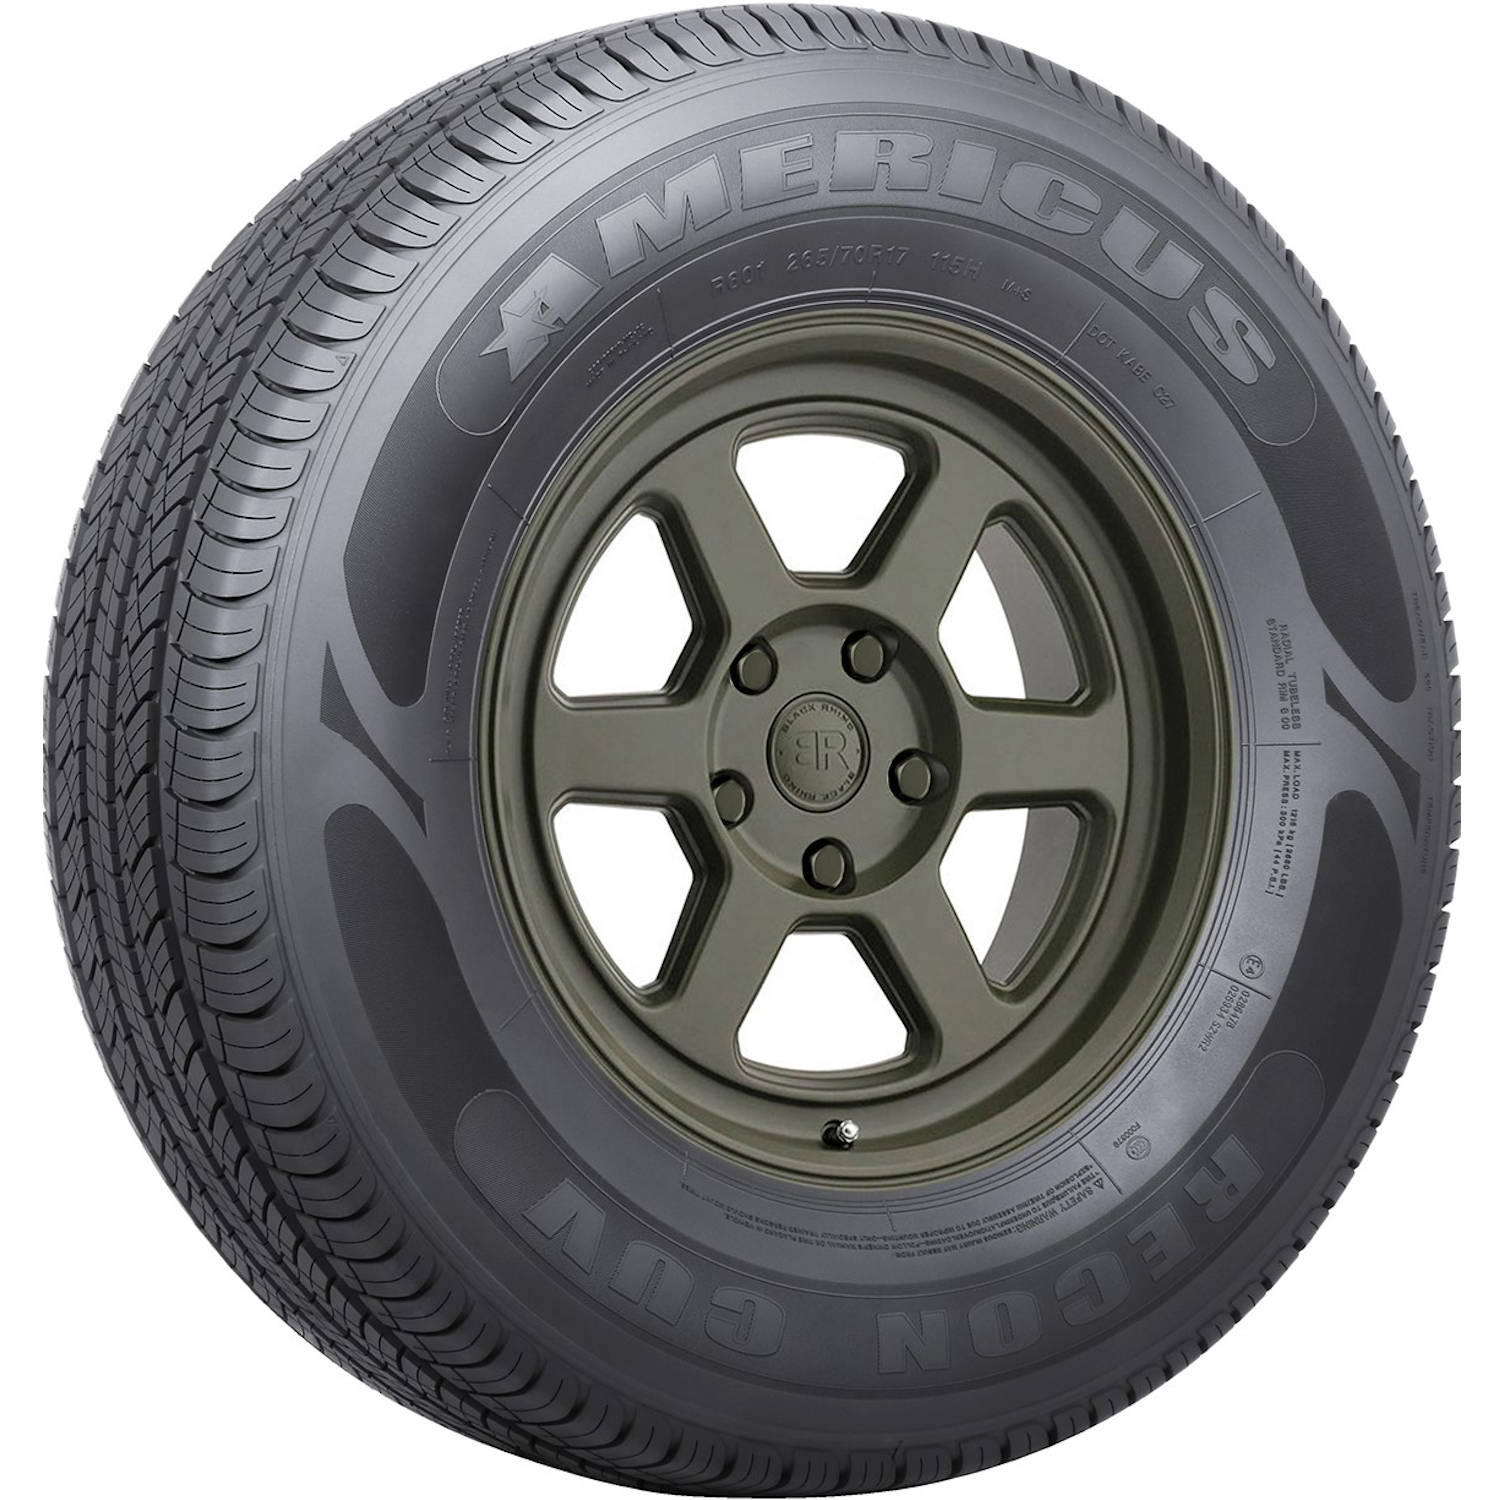 AMERICUS RECON CUV 235/60R17 (28.1X9.3R 17) Tires